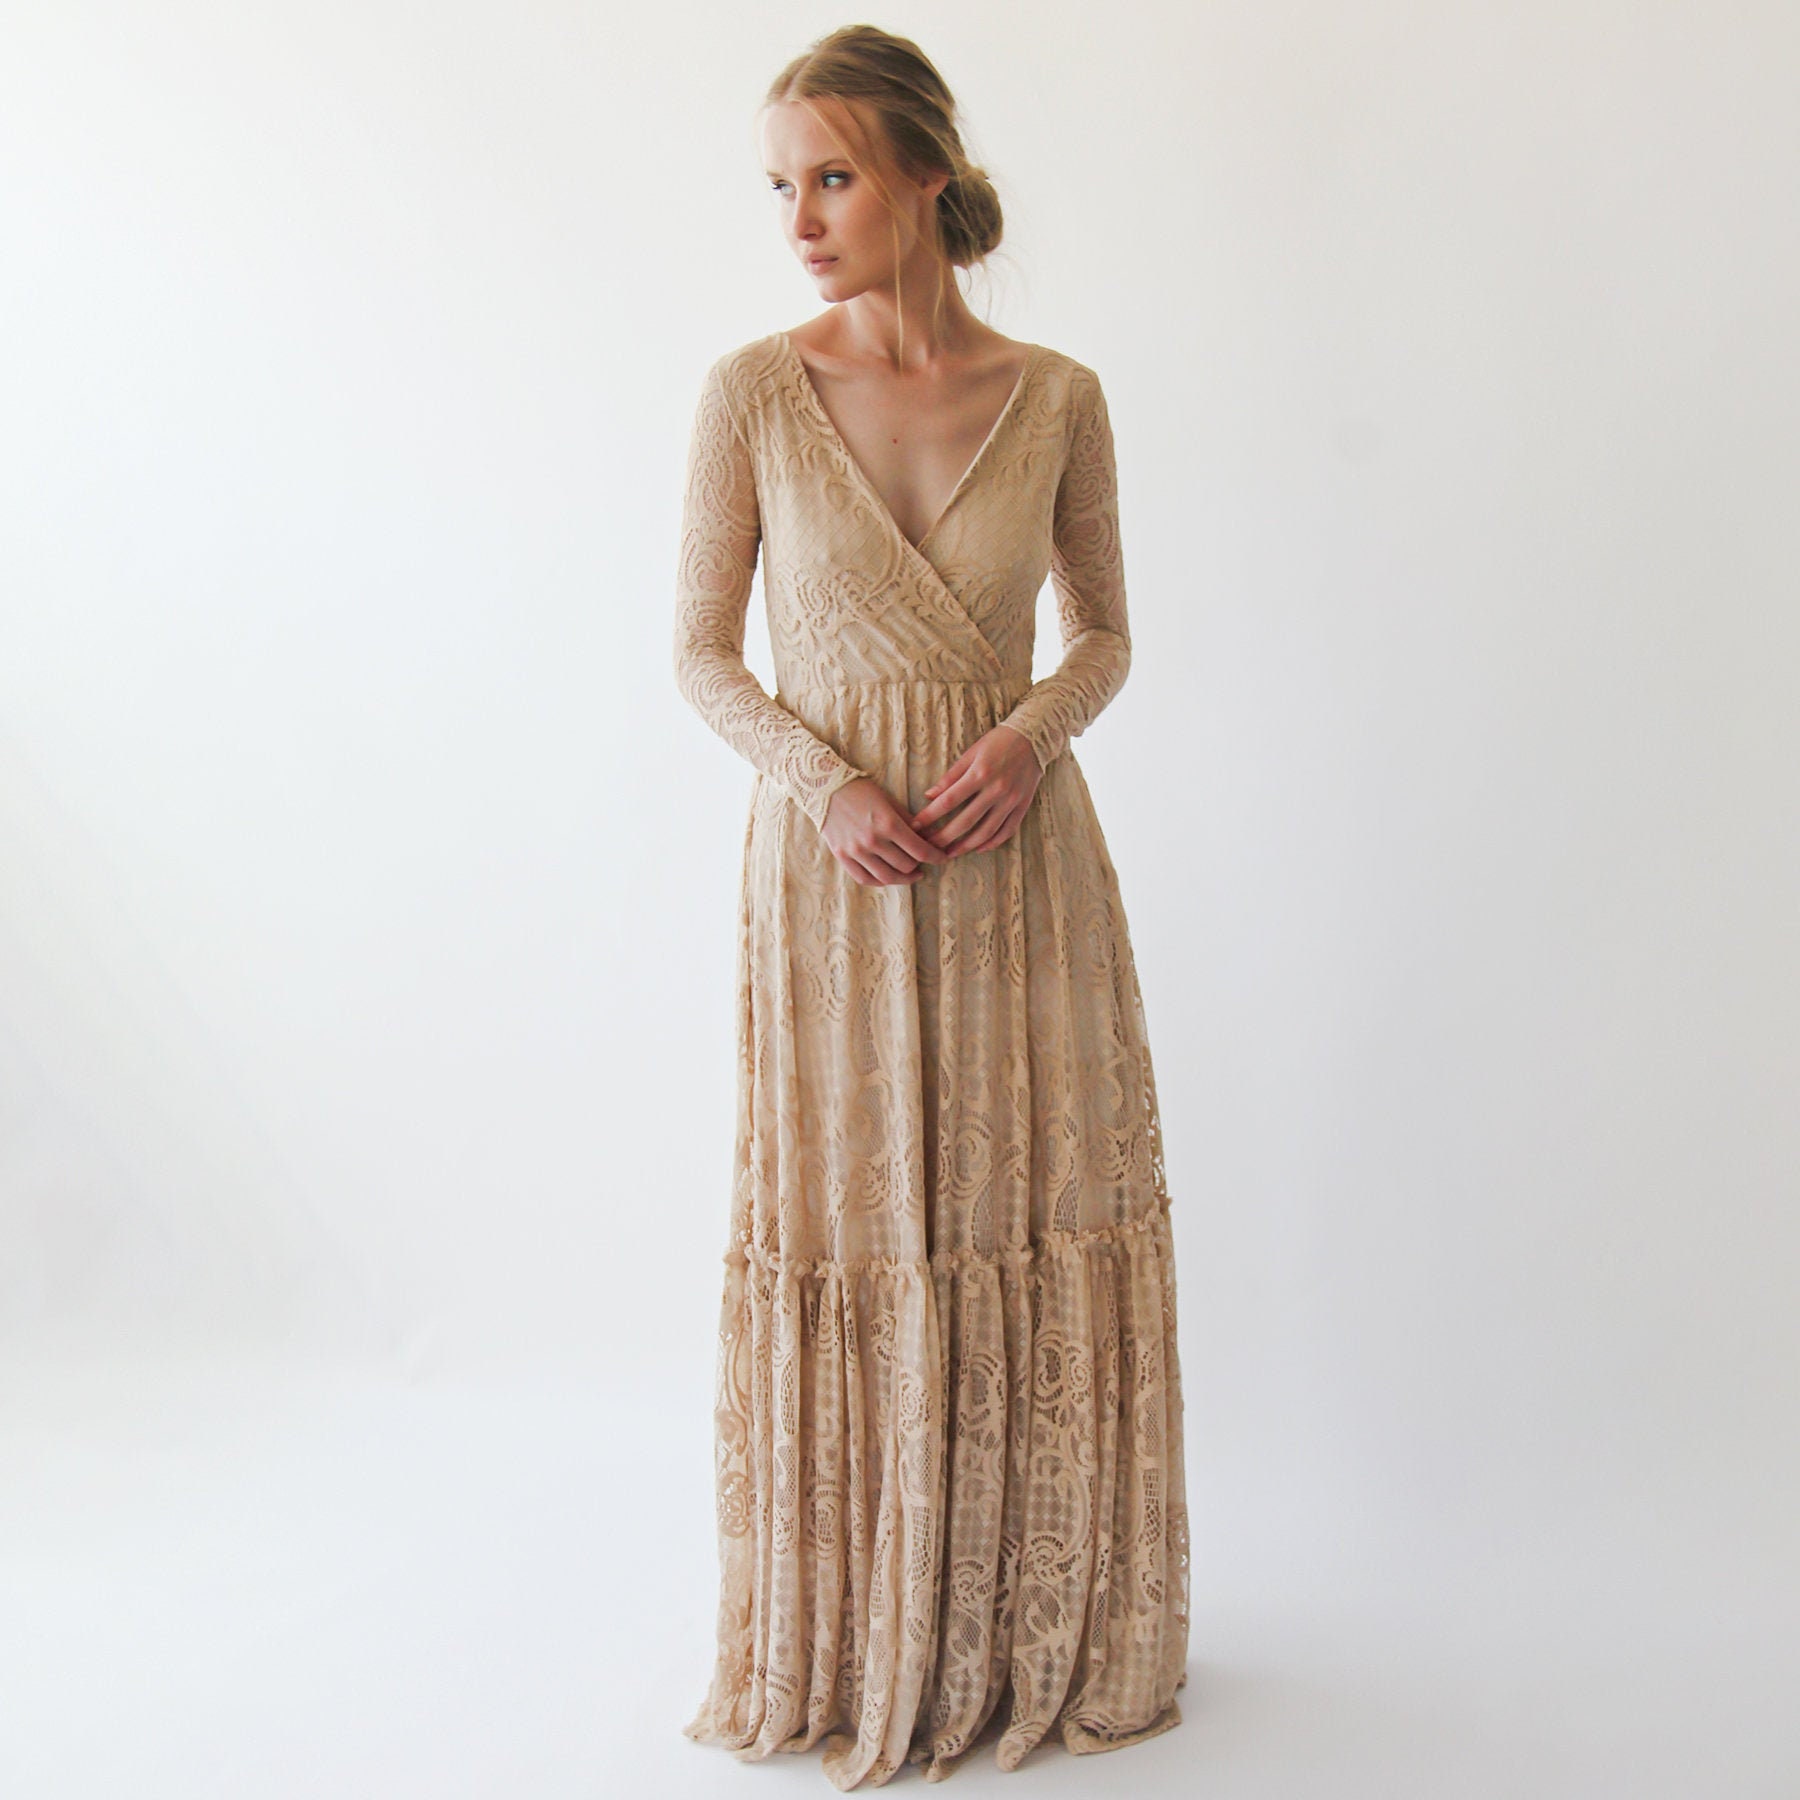 Golden Lace Bohemian Wedding Dress 1233 | Etsy